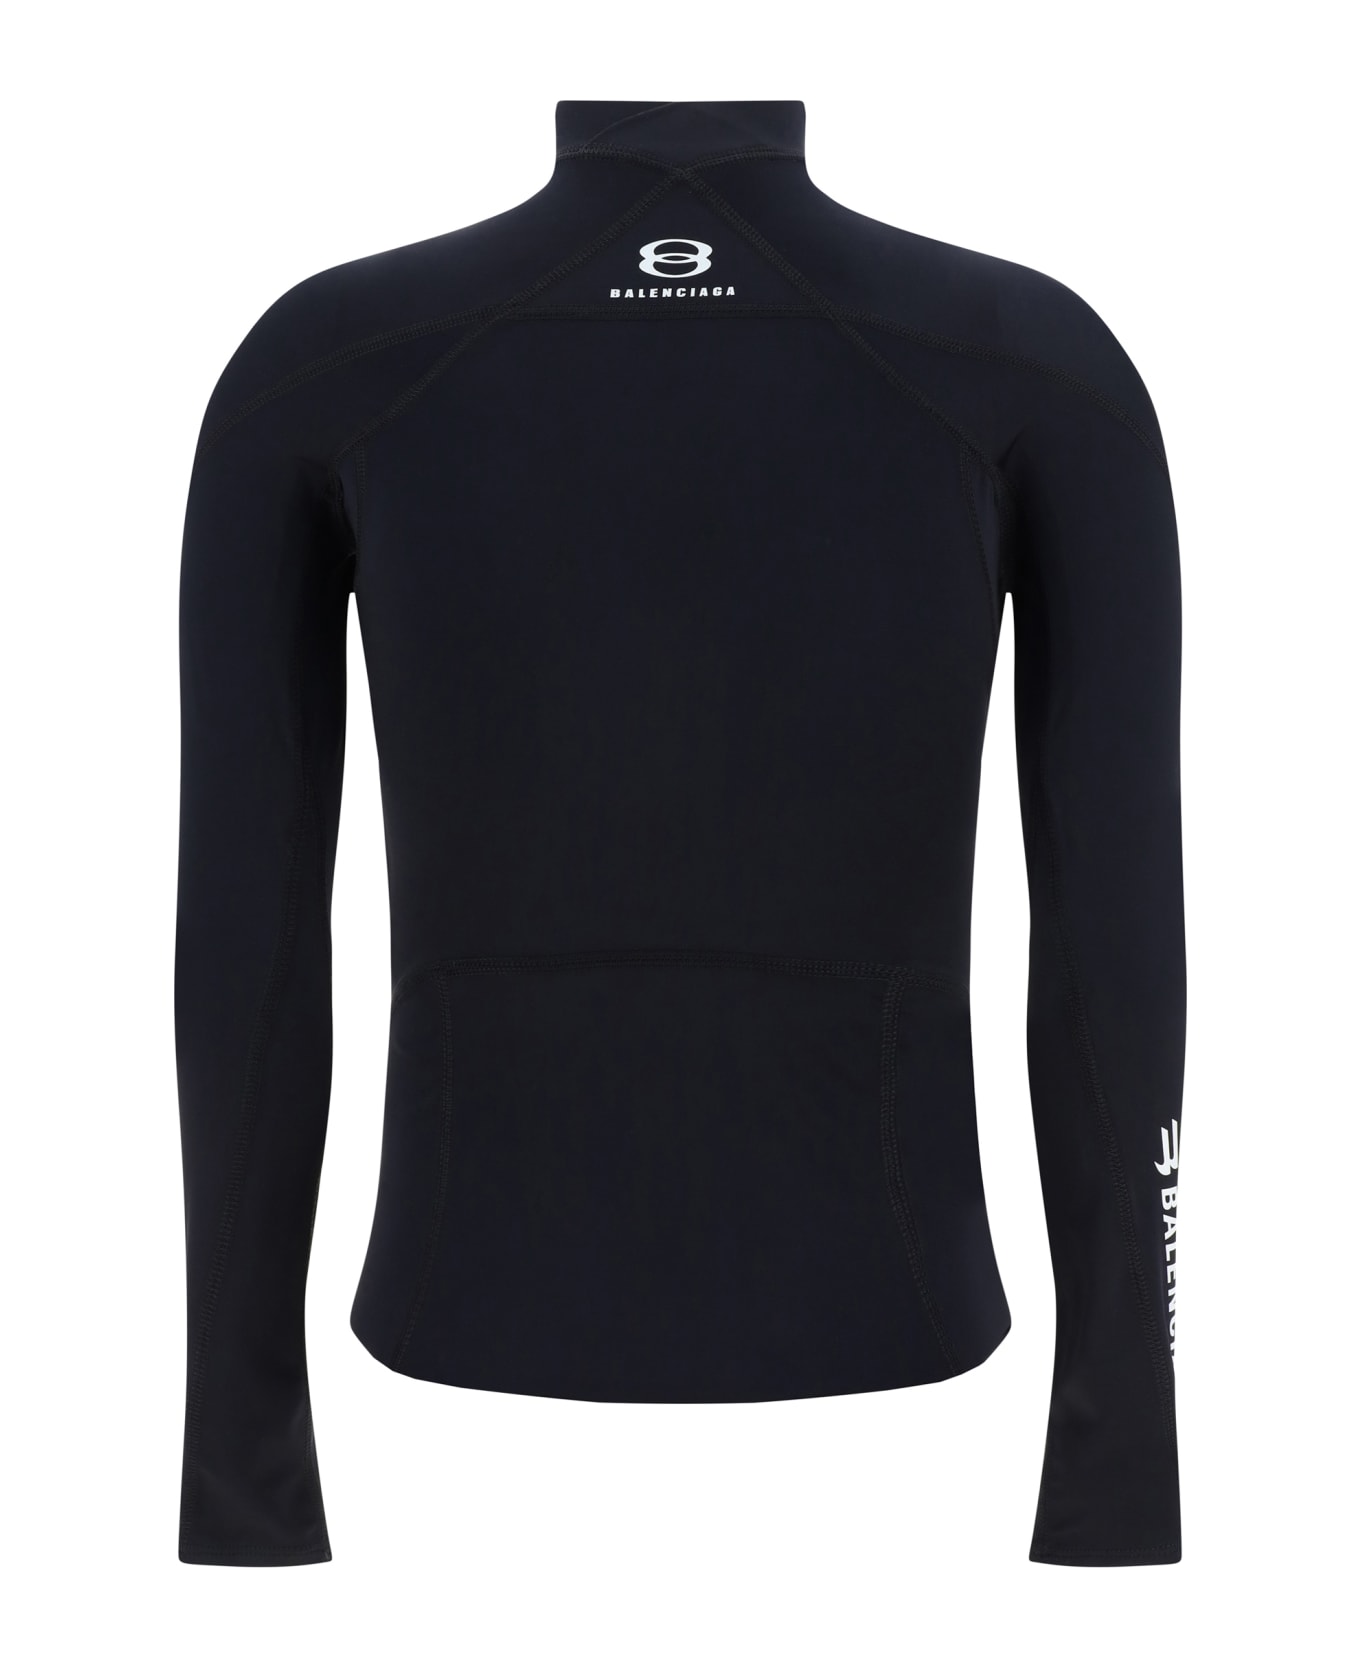 Balenciaga Long-sleeved Jersey - Black ニットウェア